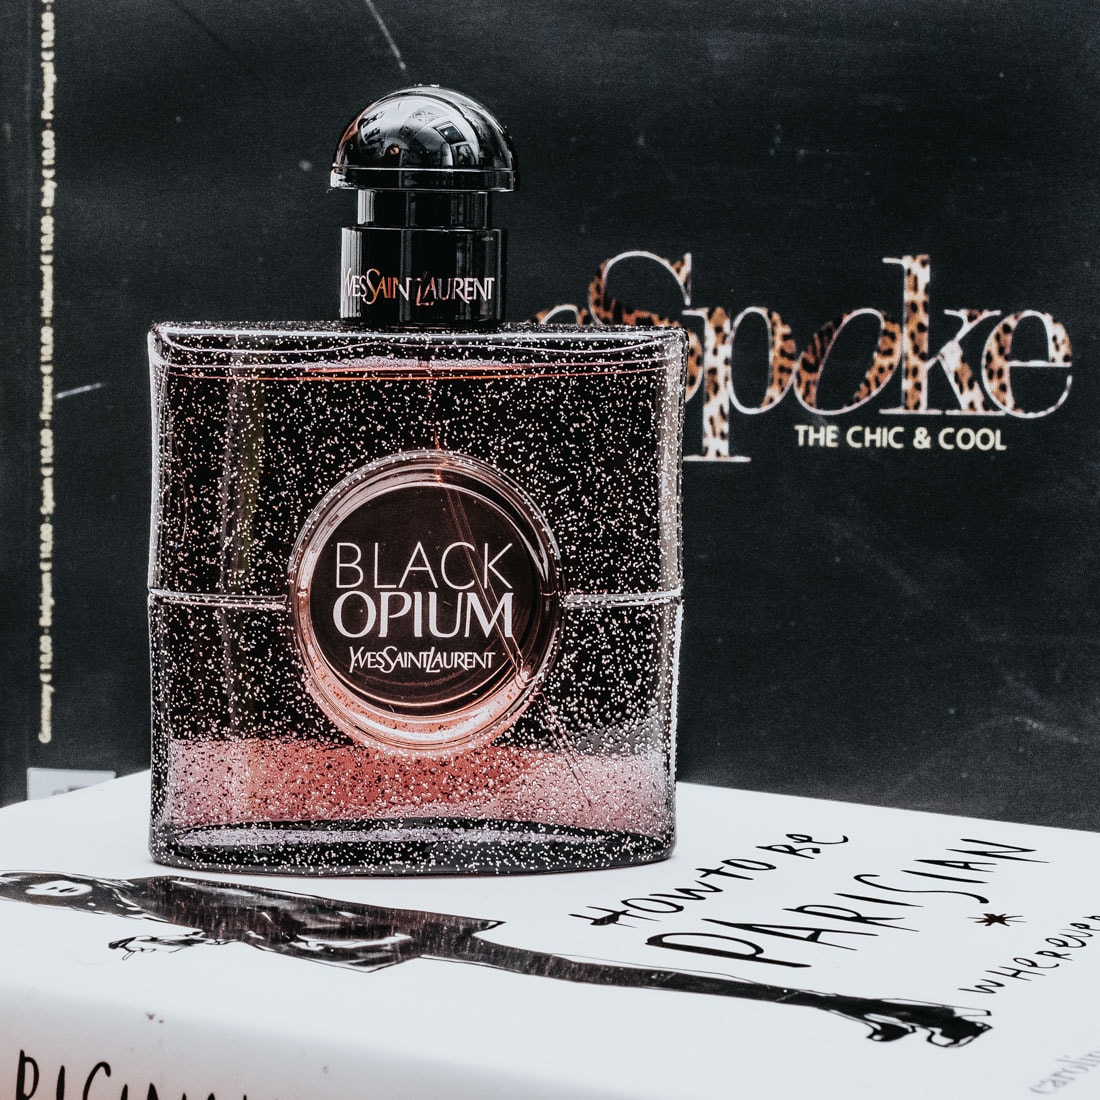 Black Opium, Yves Saint Laurent, parfum, avis